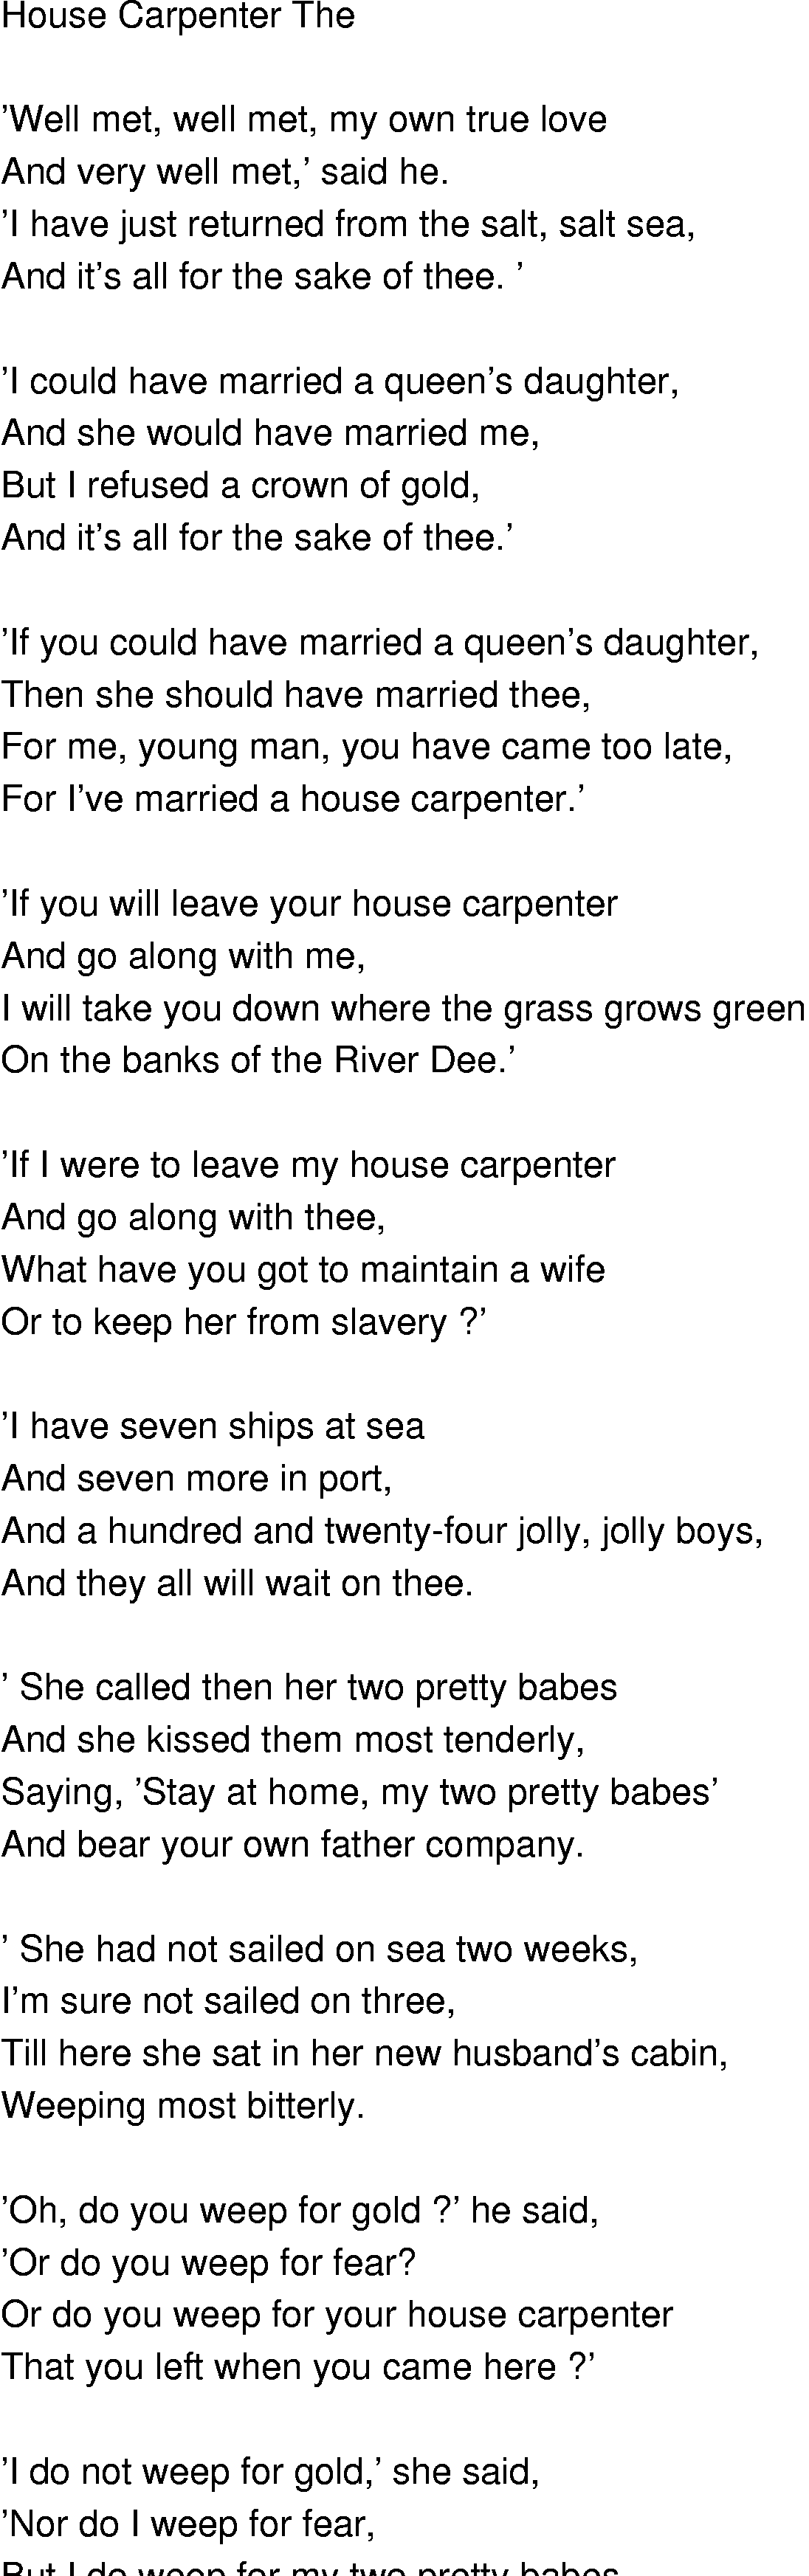 Old-Time (oldtimey) Song Lyrics - house carpenter